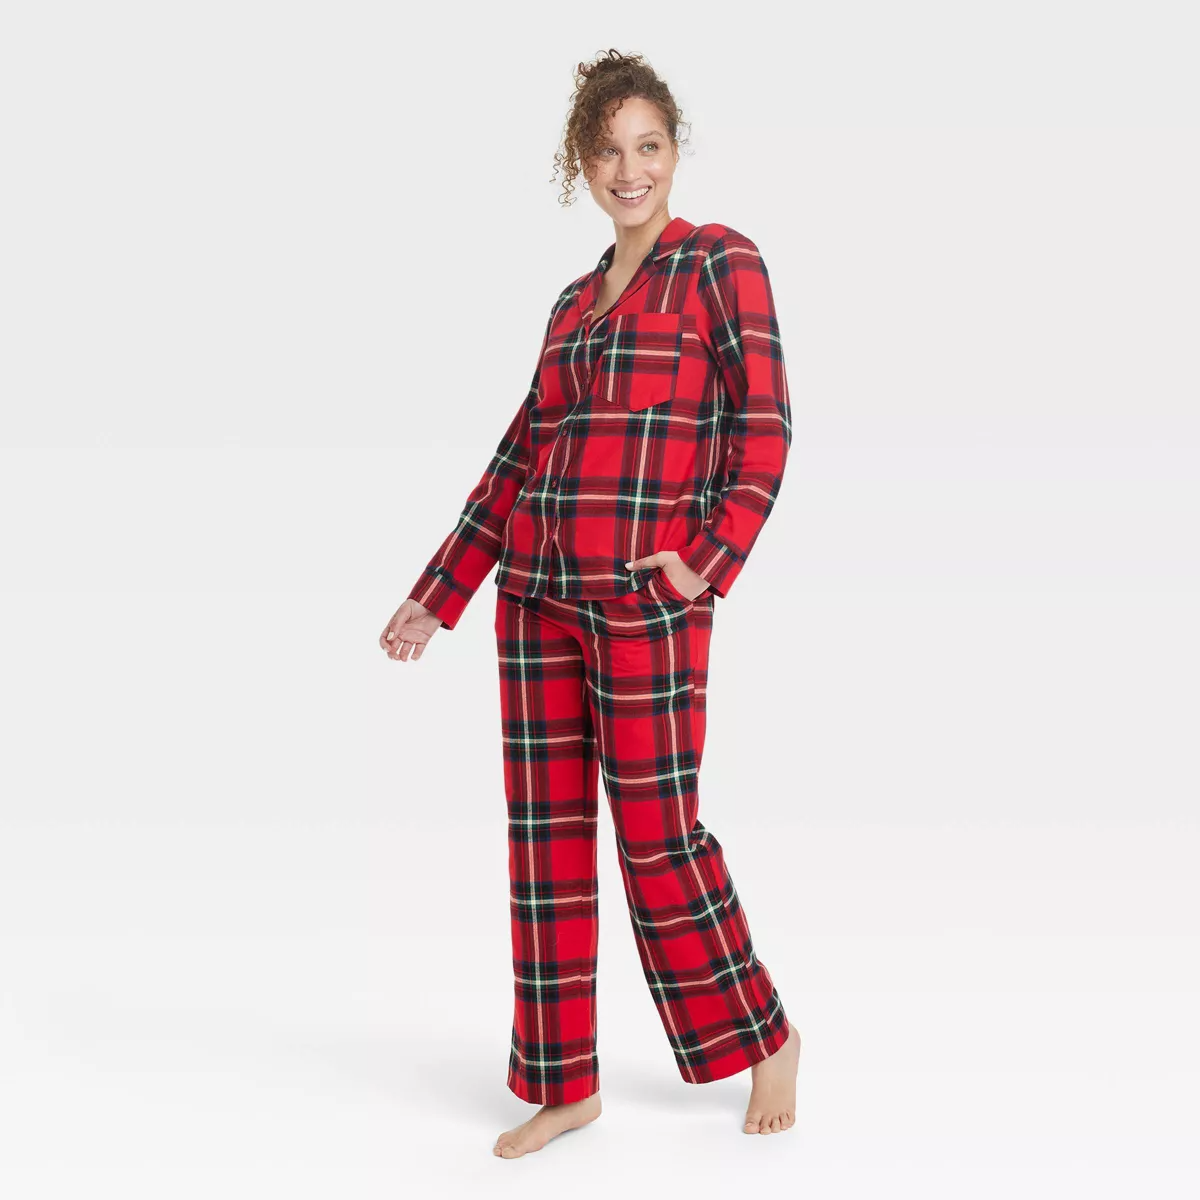 Women's Beautifully Soft Short Sleeve Notch Collar Top And Shorts Pajama  Set - Stars Above™ : Target